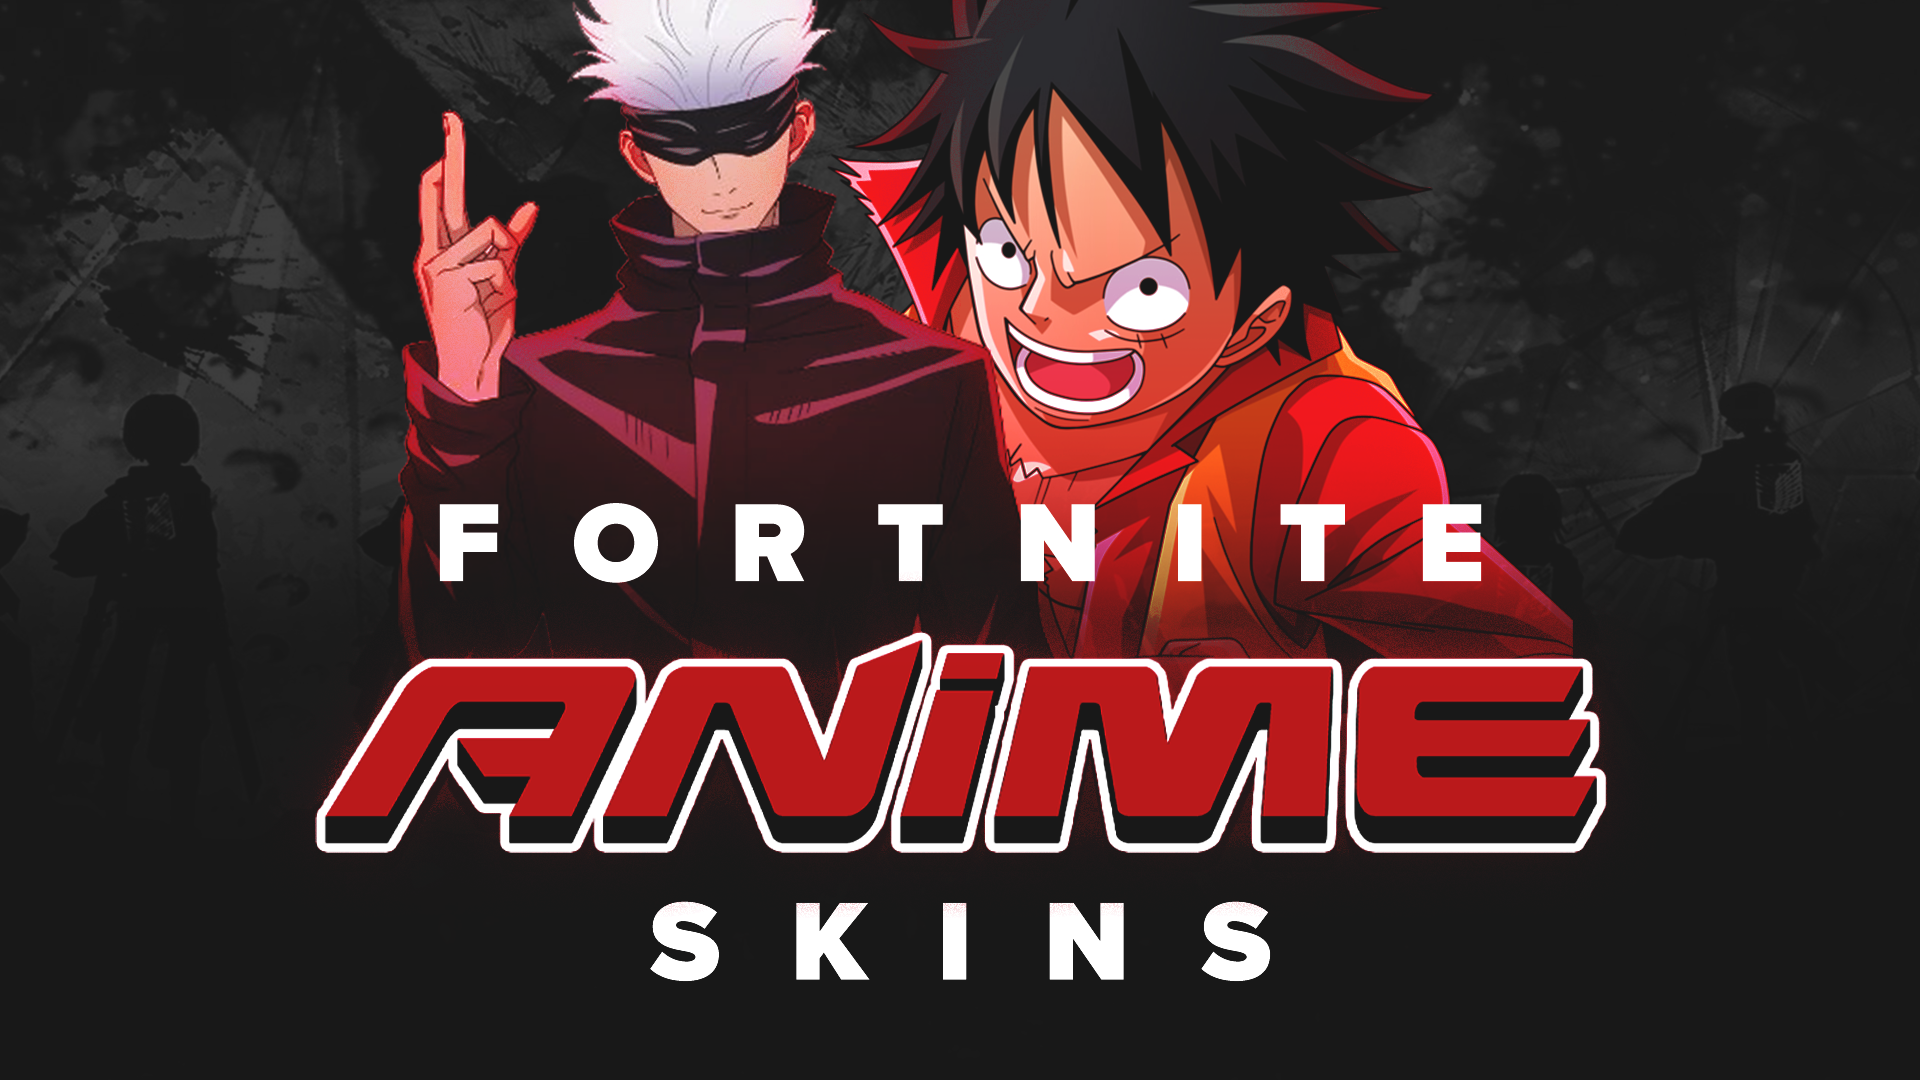 All Anime Skins in Fortnite - YouTube